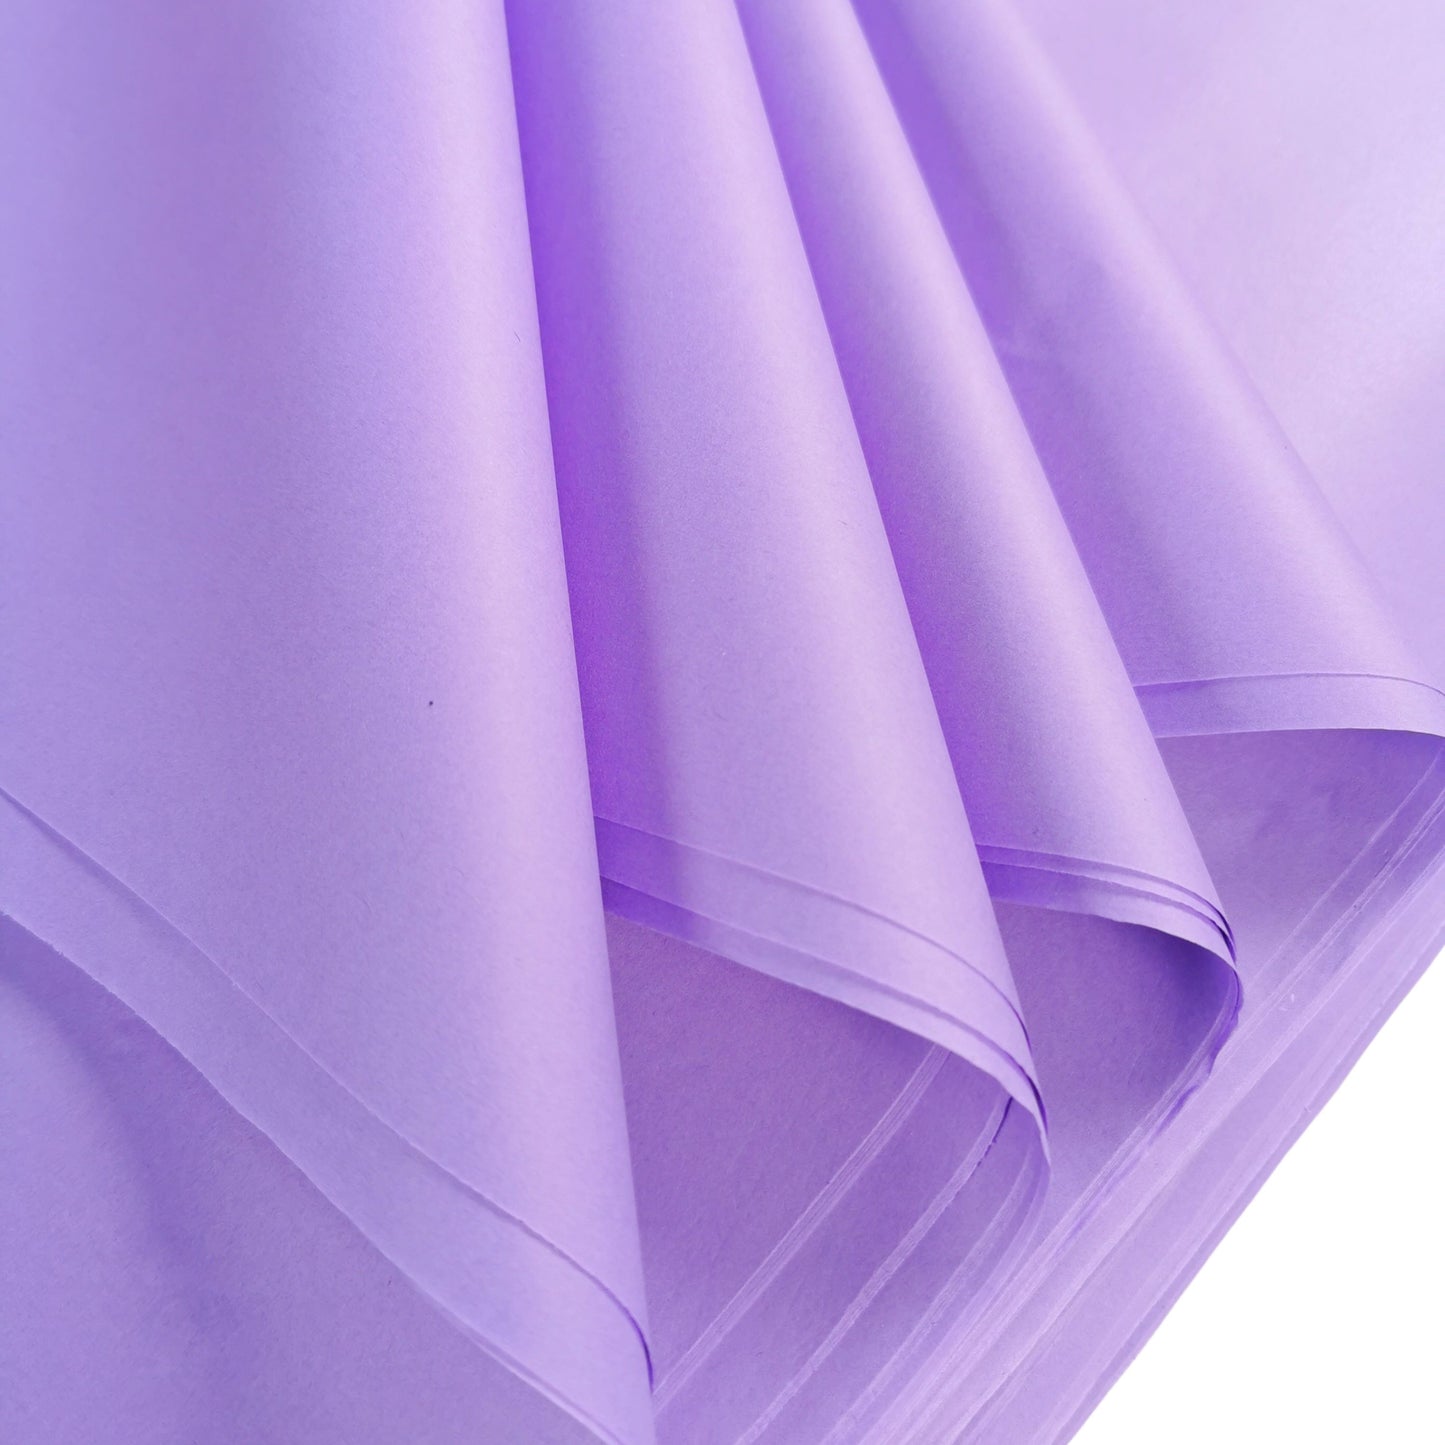 Tissue Paper 50cm x 75cm 17gsm Lilac